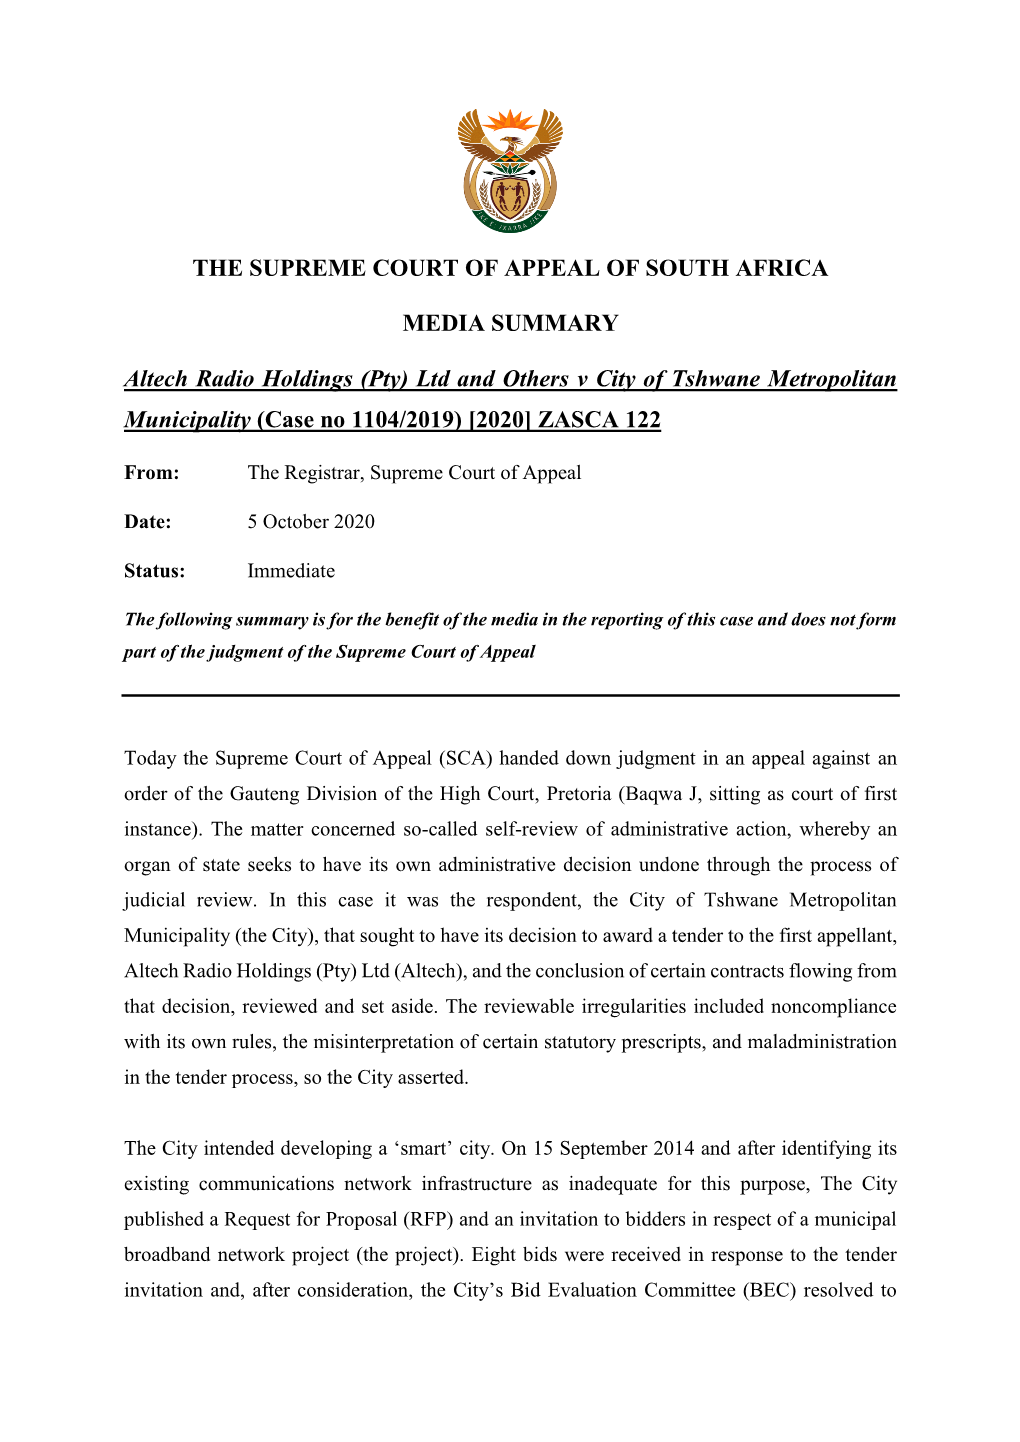 Ltd and Others V City of Tshwane Metropolitan Municipality (Case No 1104/2019) [2020] ZASCA 122